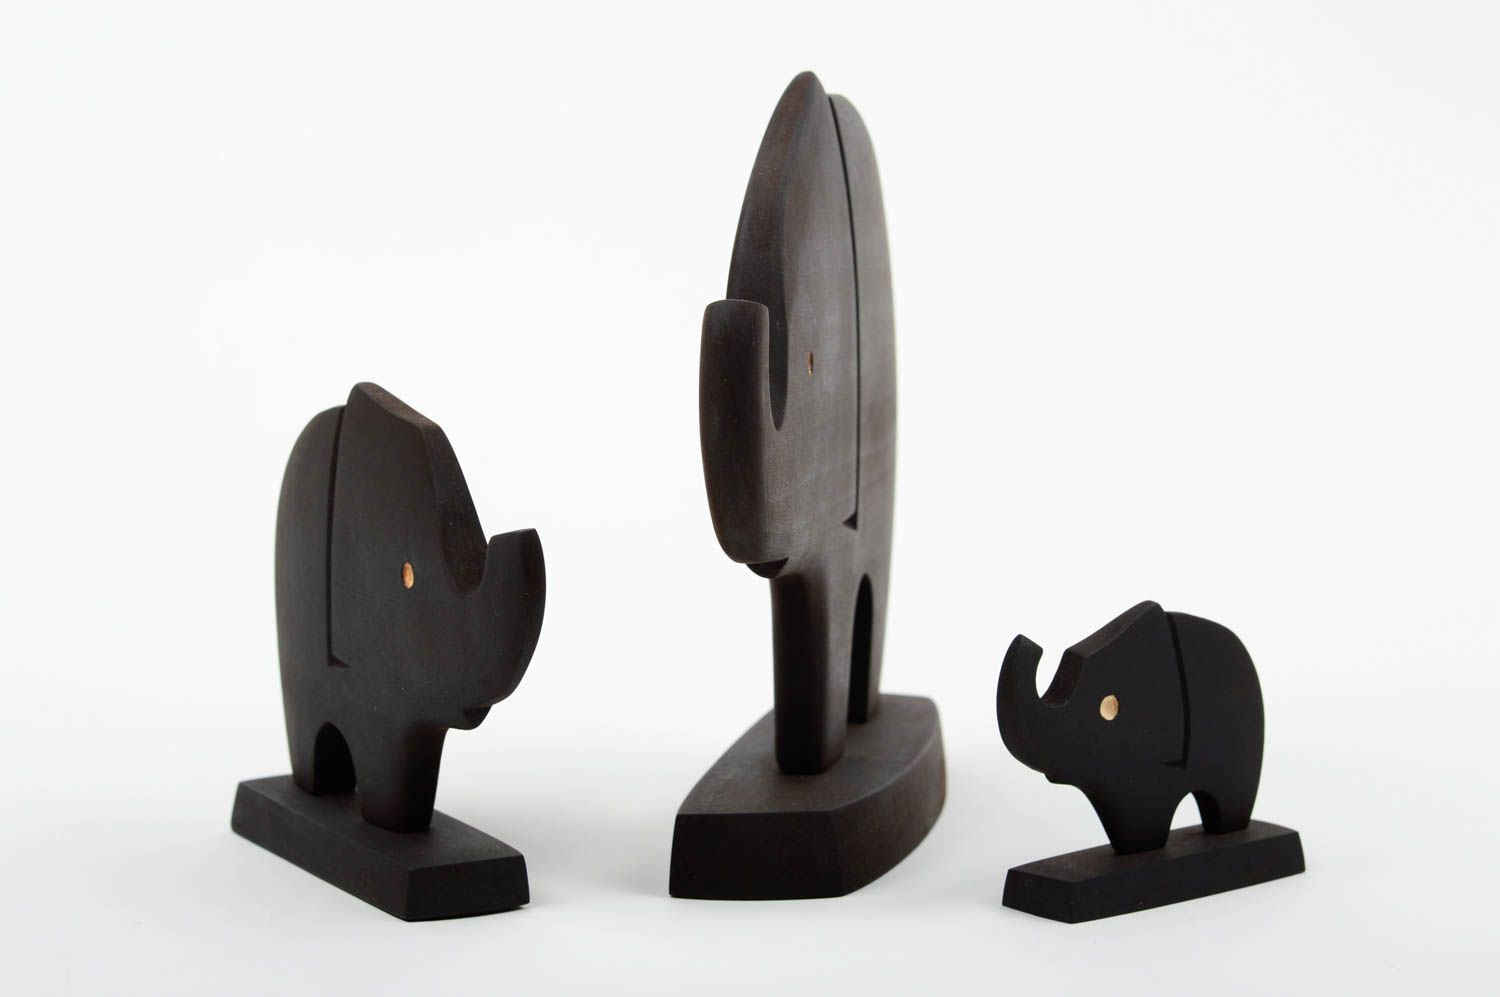 Wooden elephants statuette unusual eco home decor stylish handmade figurines photo 2